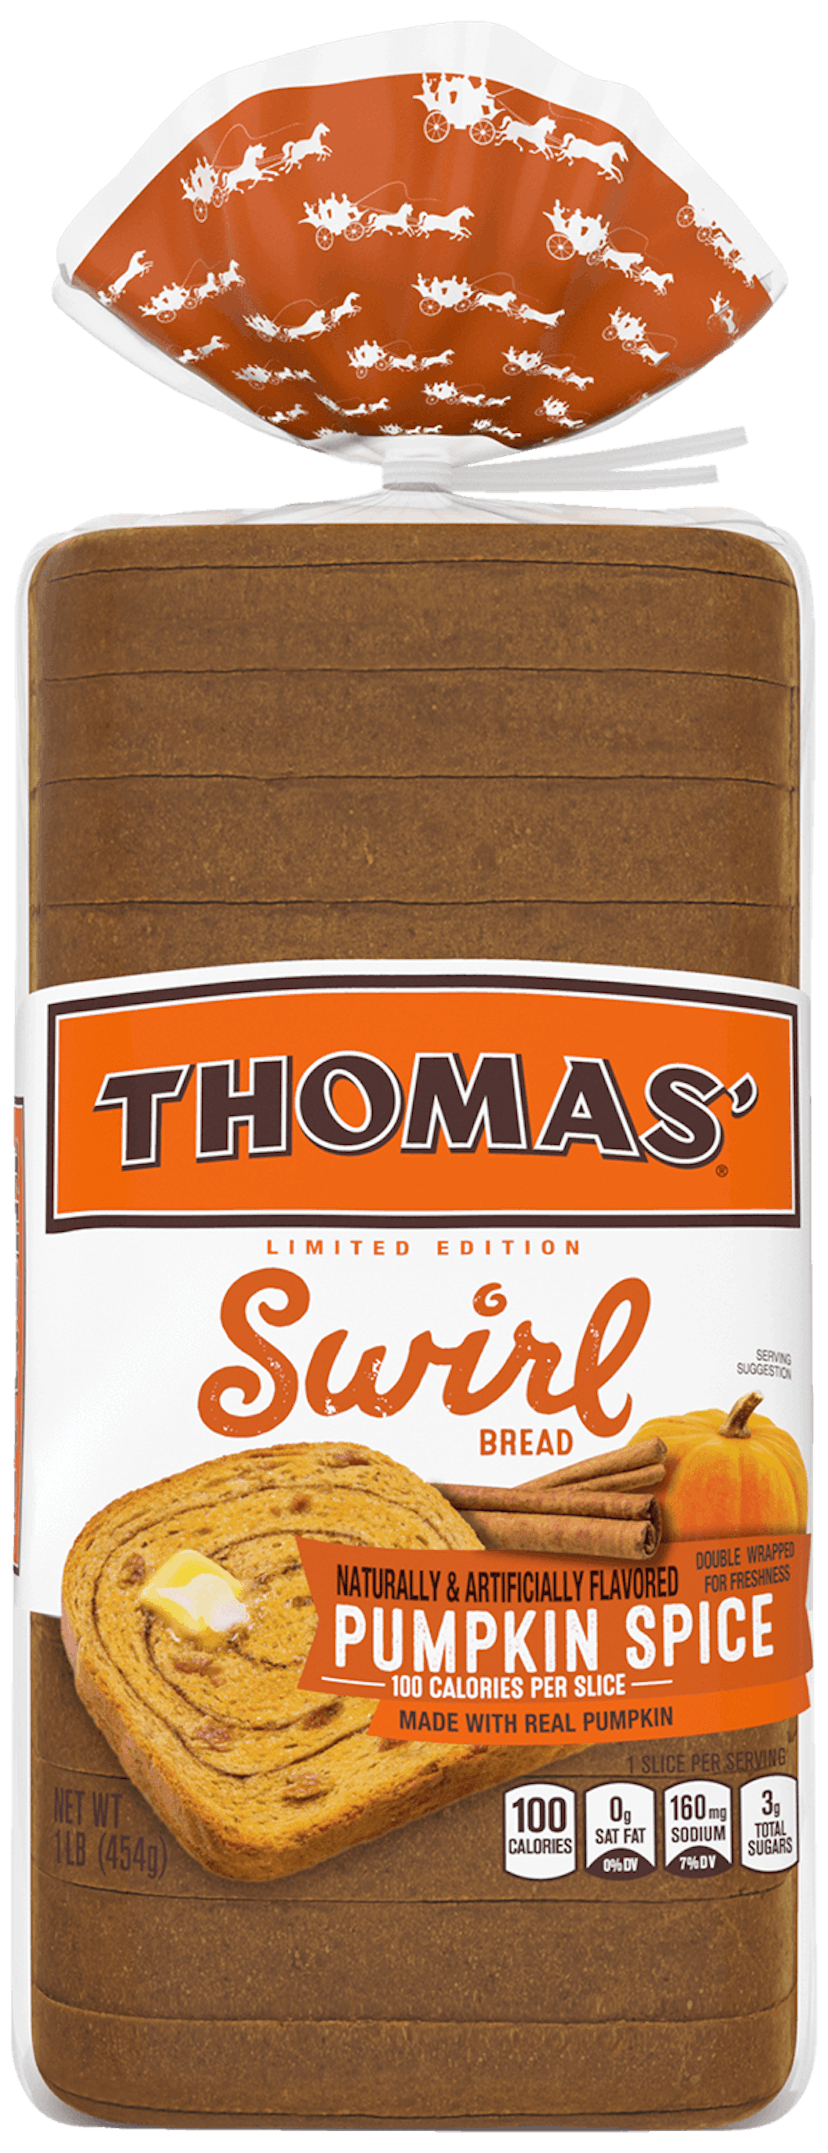 Thomas’ Pumpkin Spice Swirl Bread